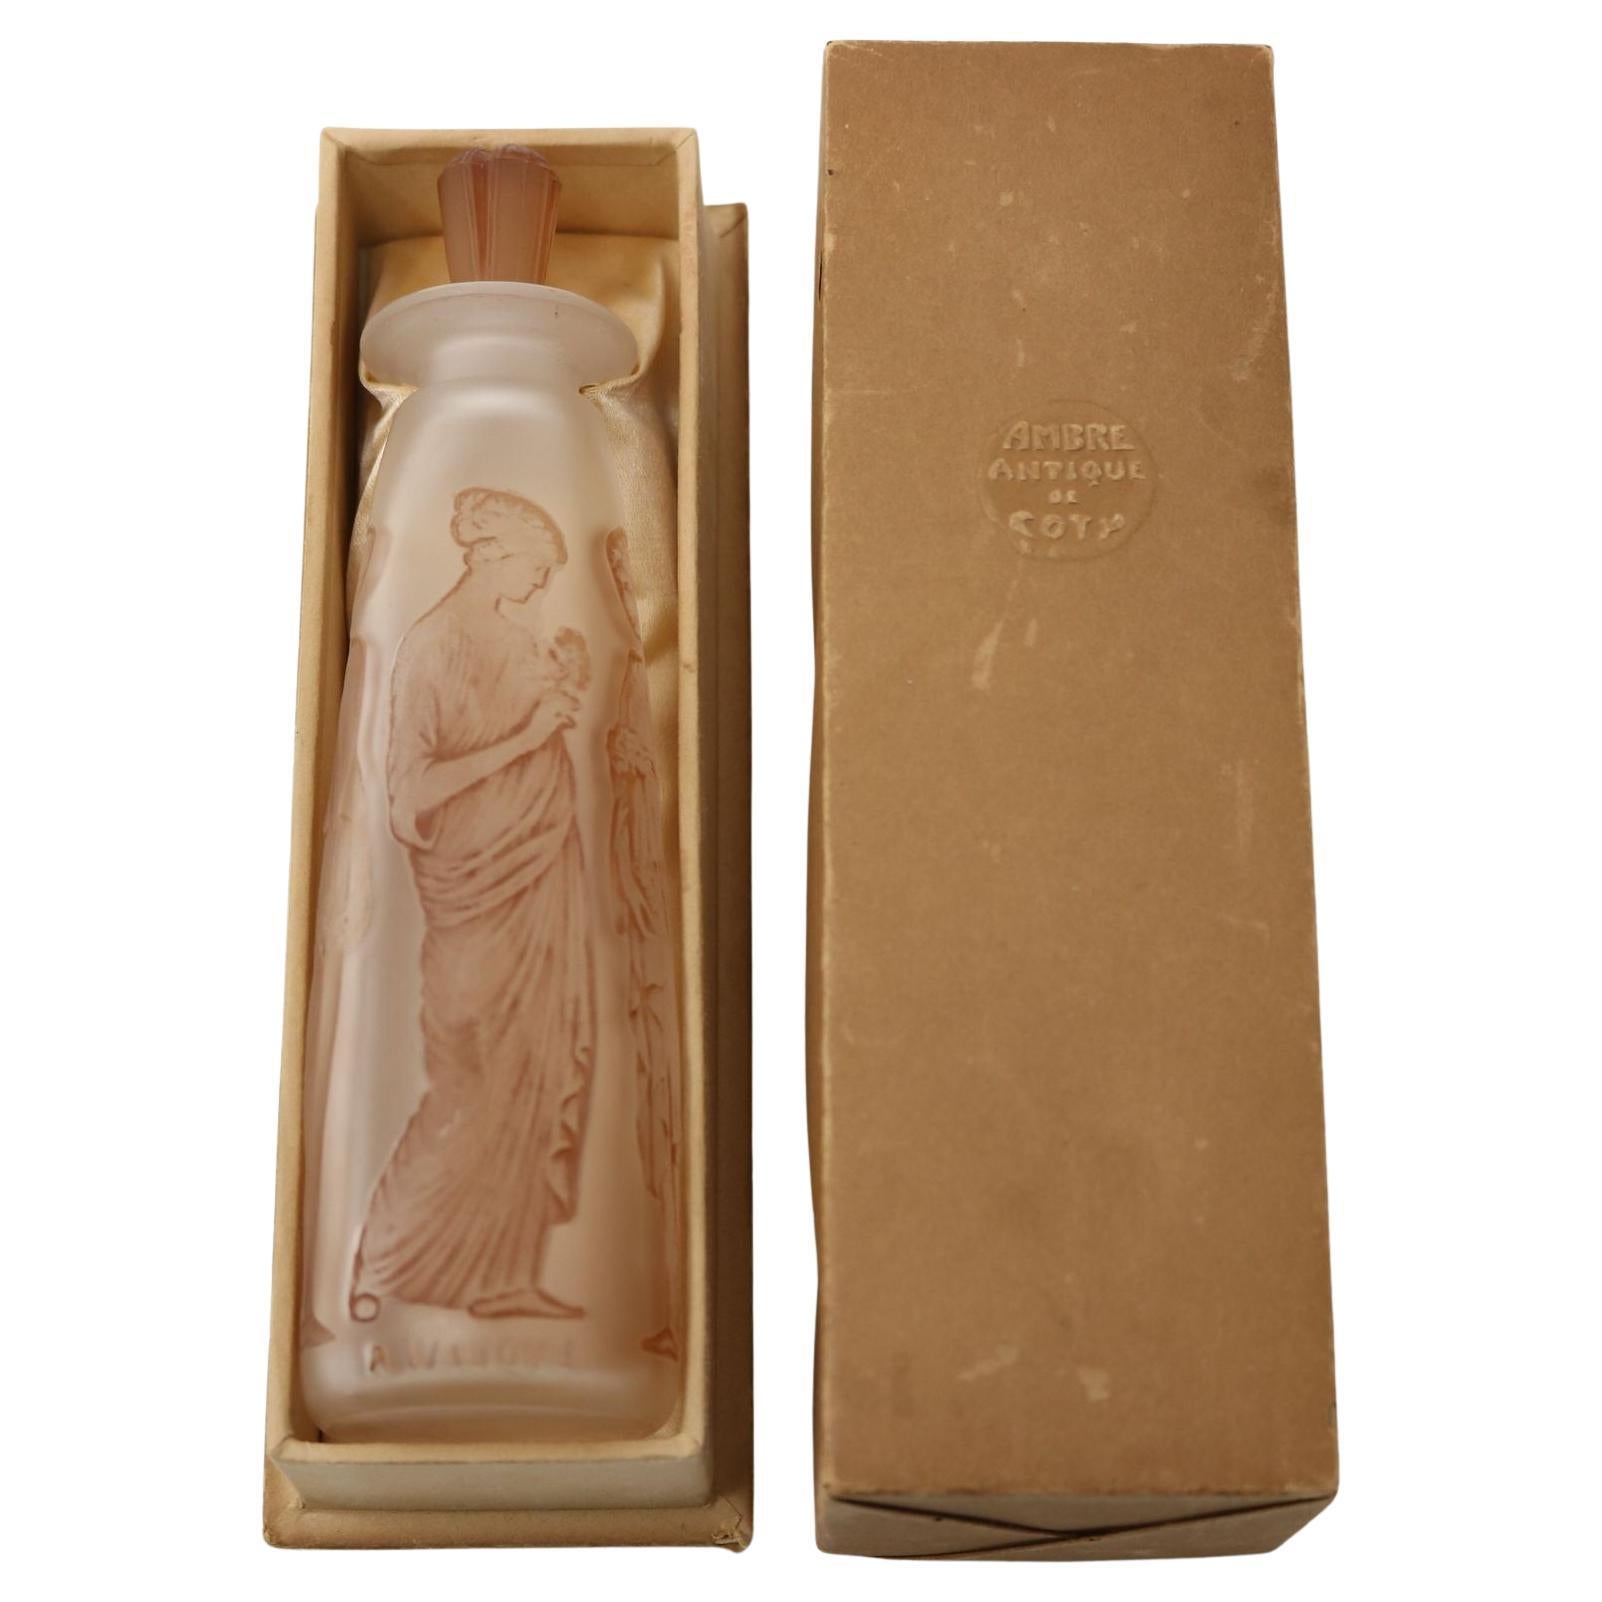 Rene Lalique Glass Ambre Antique Perfume Bottle with Box For Sale